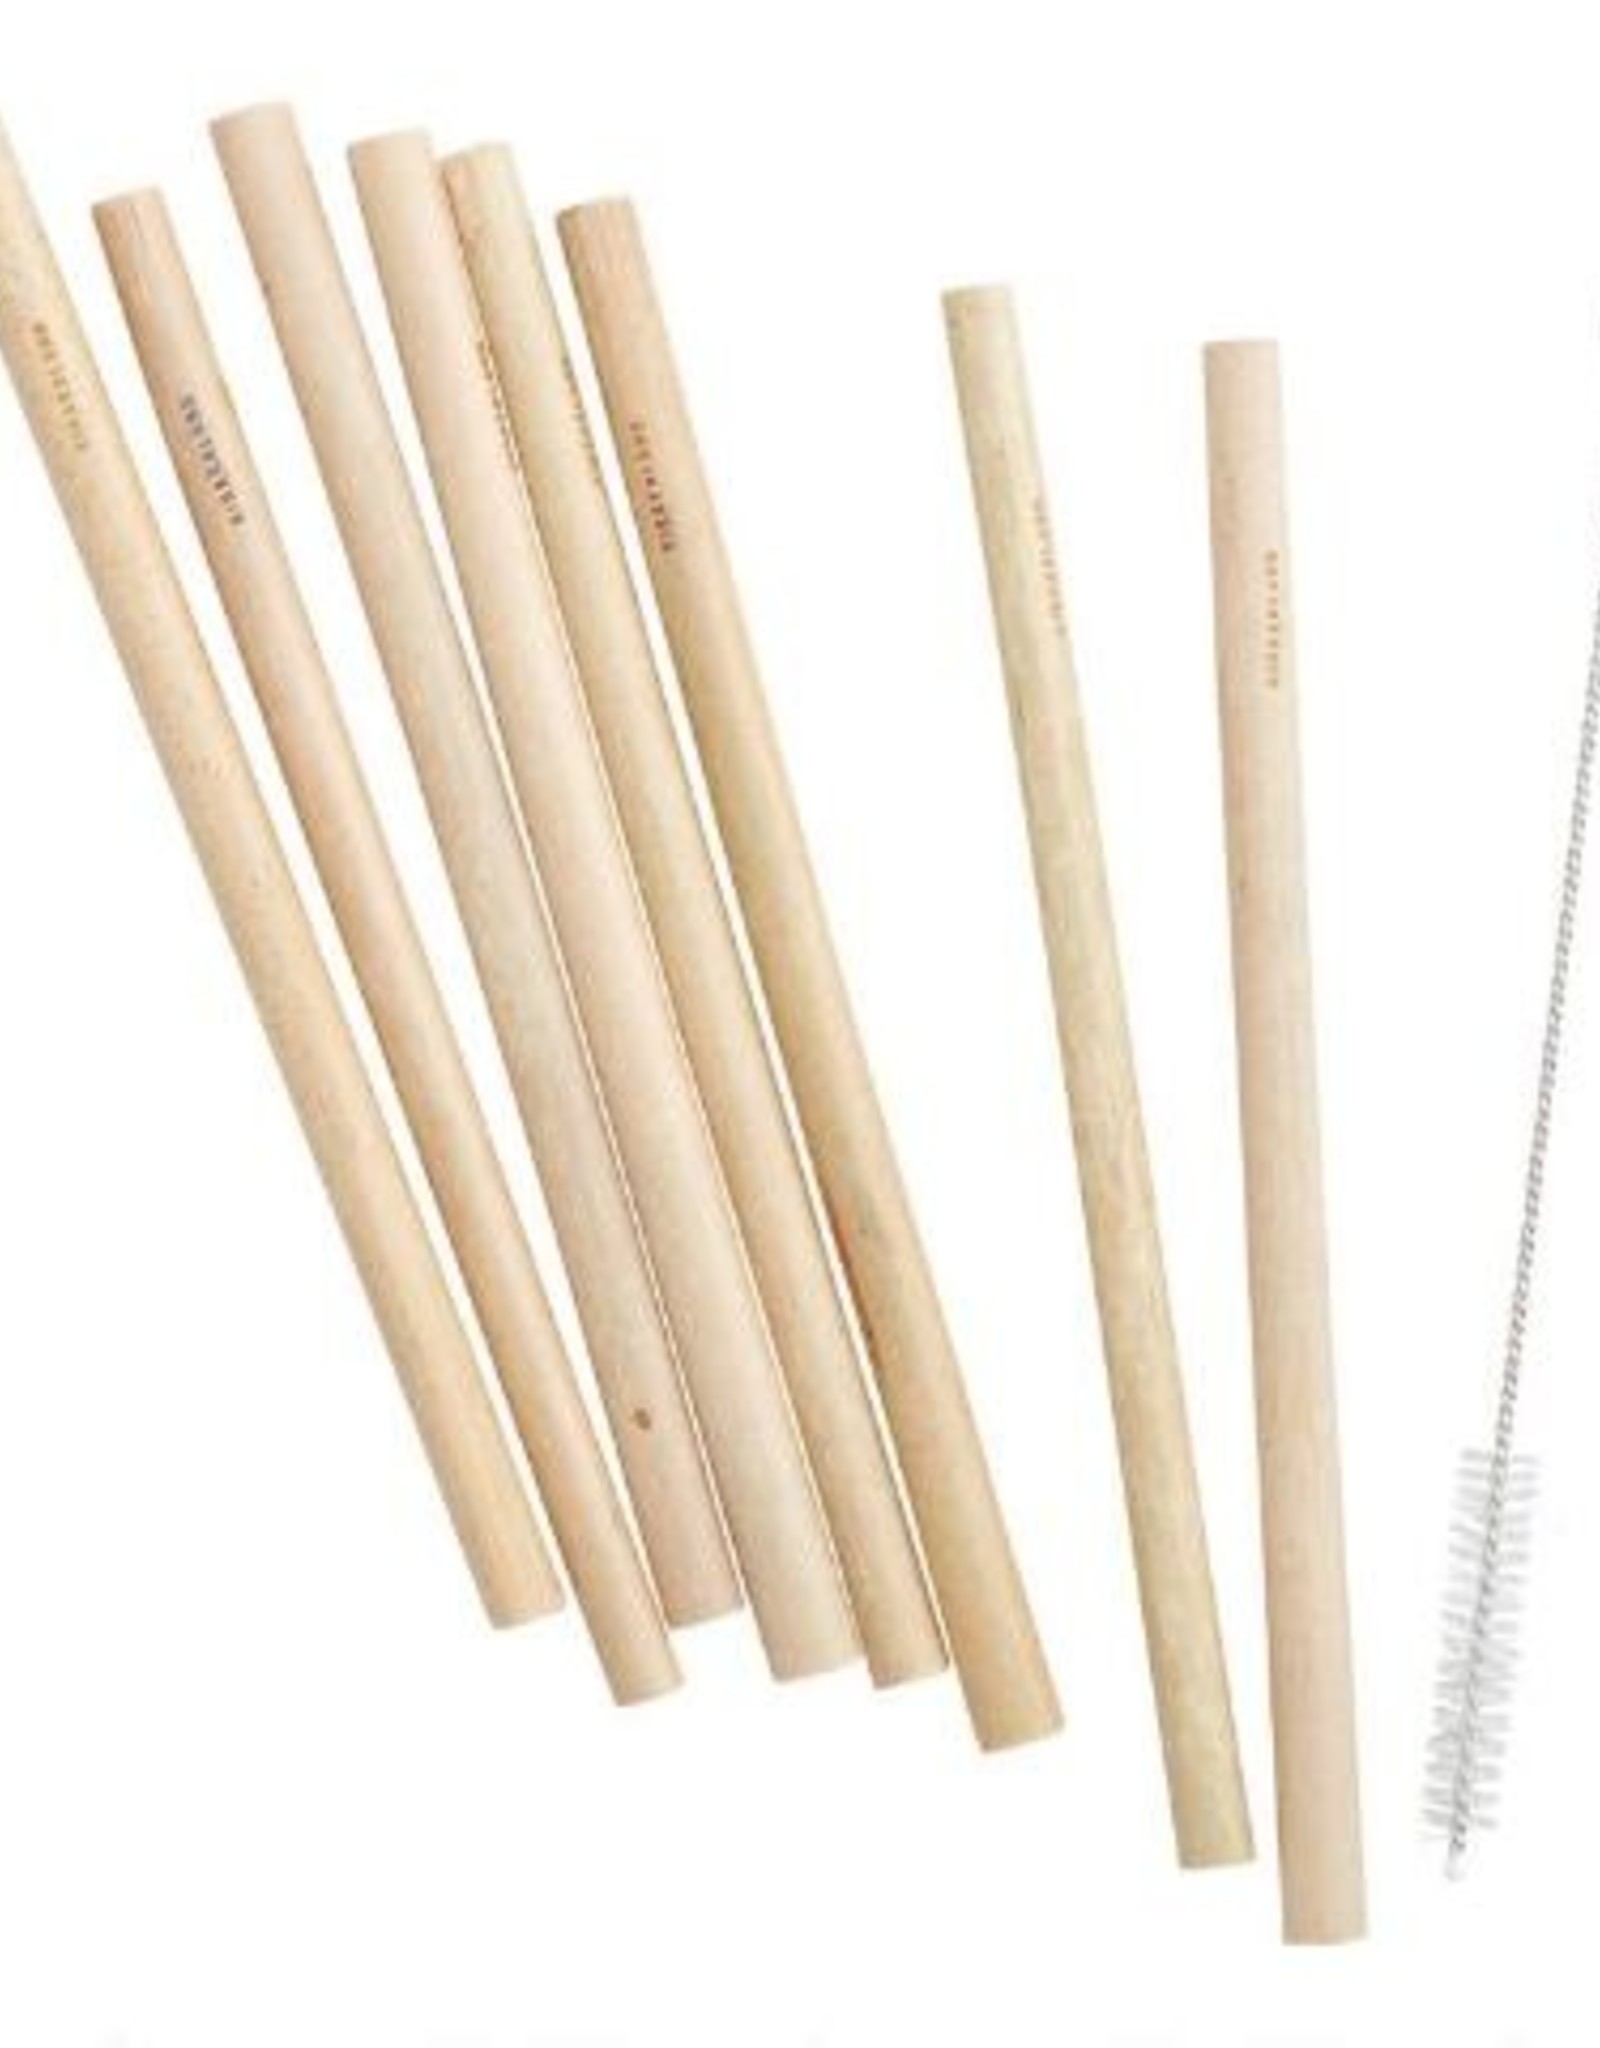 Kikkerland Straws - Bamboo